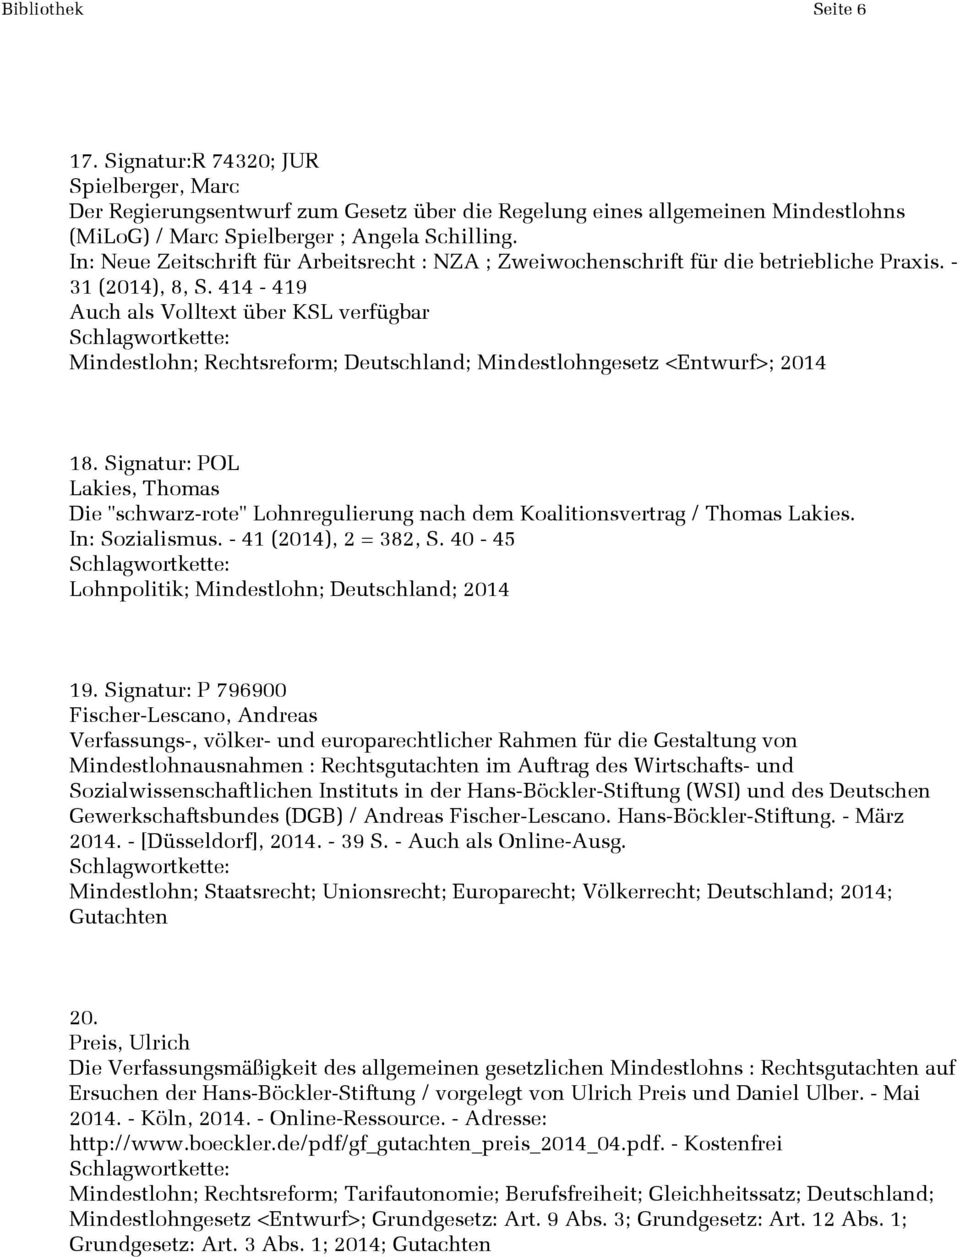 Signatur: POL Lakies, Thomas Die "schwarz-rote" Lohnregulierung nach dem Koalitionsvertrag / Thomas Lakies. In: Sozialismus. - 41 (2014), 2 = 382, S.